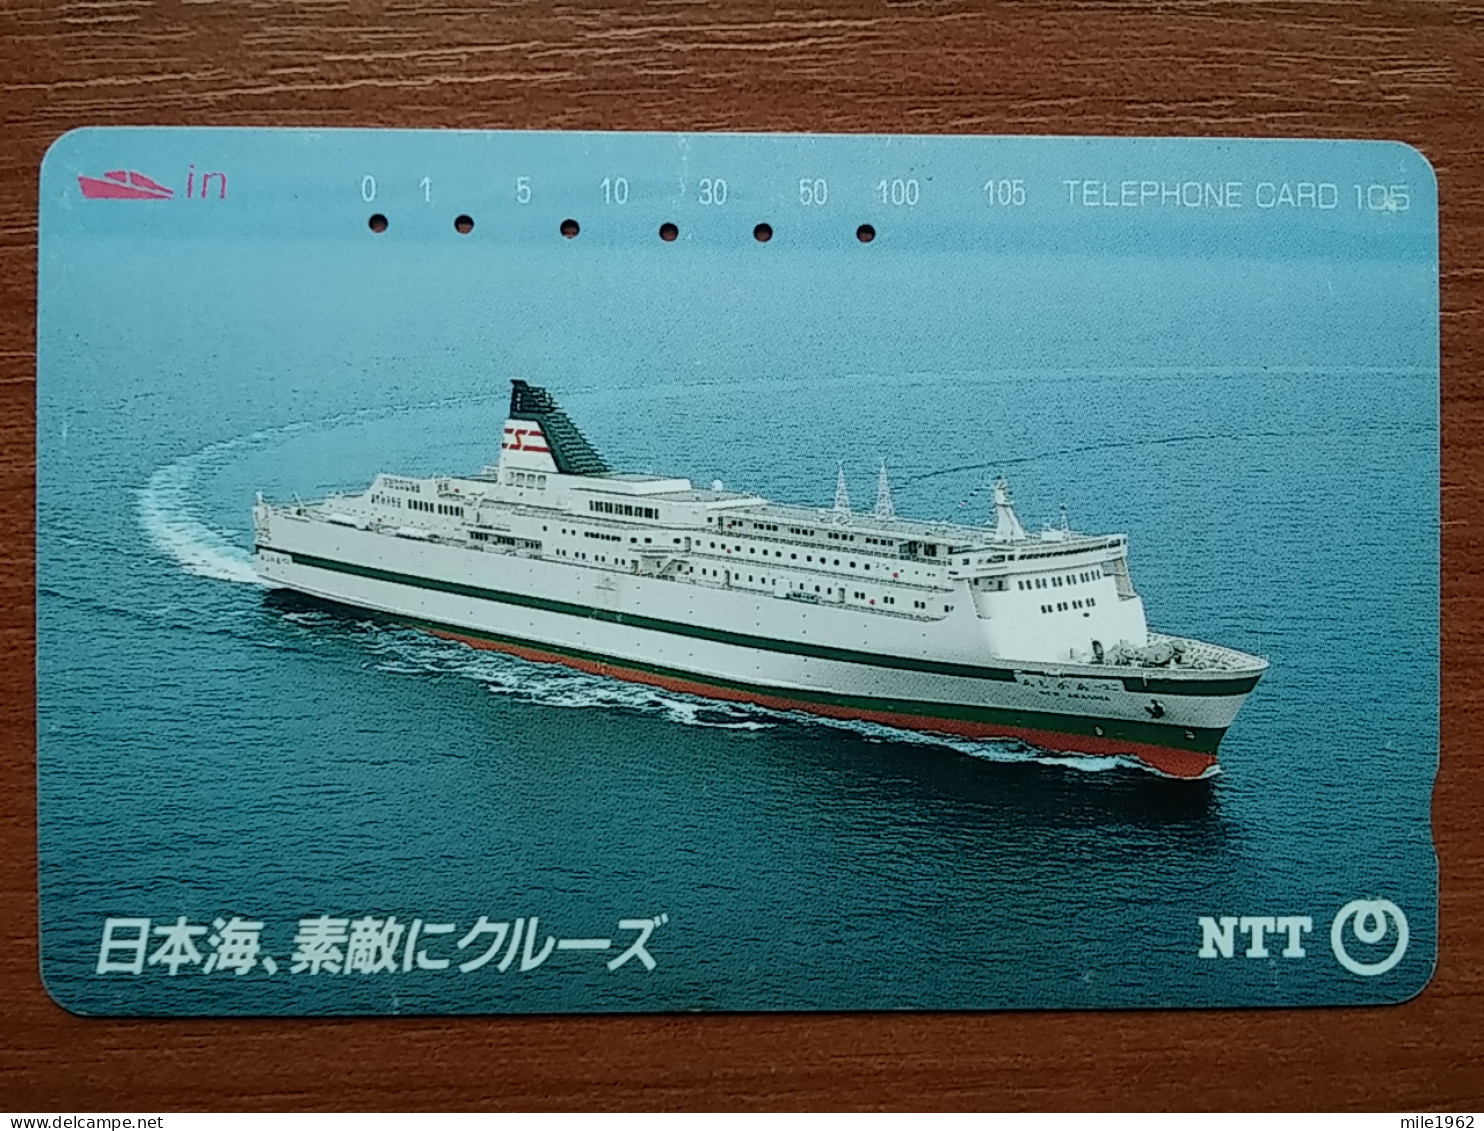 T-357 - JAPAN, Japon, Nipon, TELECARD, PHONECARD,  NTT 330-302, Ship, Navire - Barcos